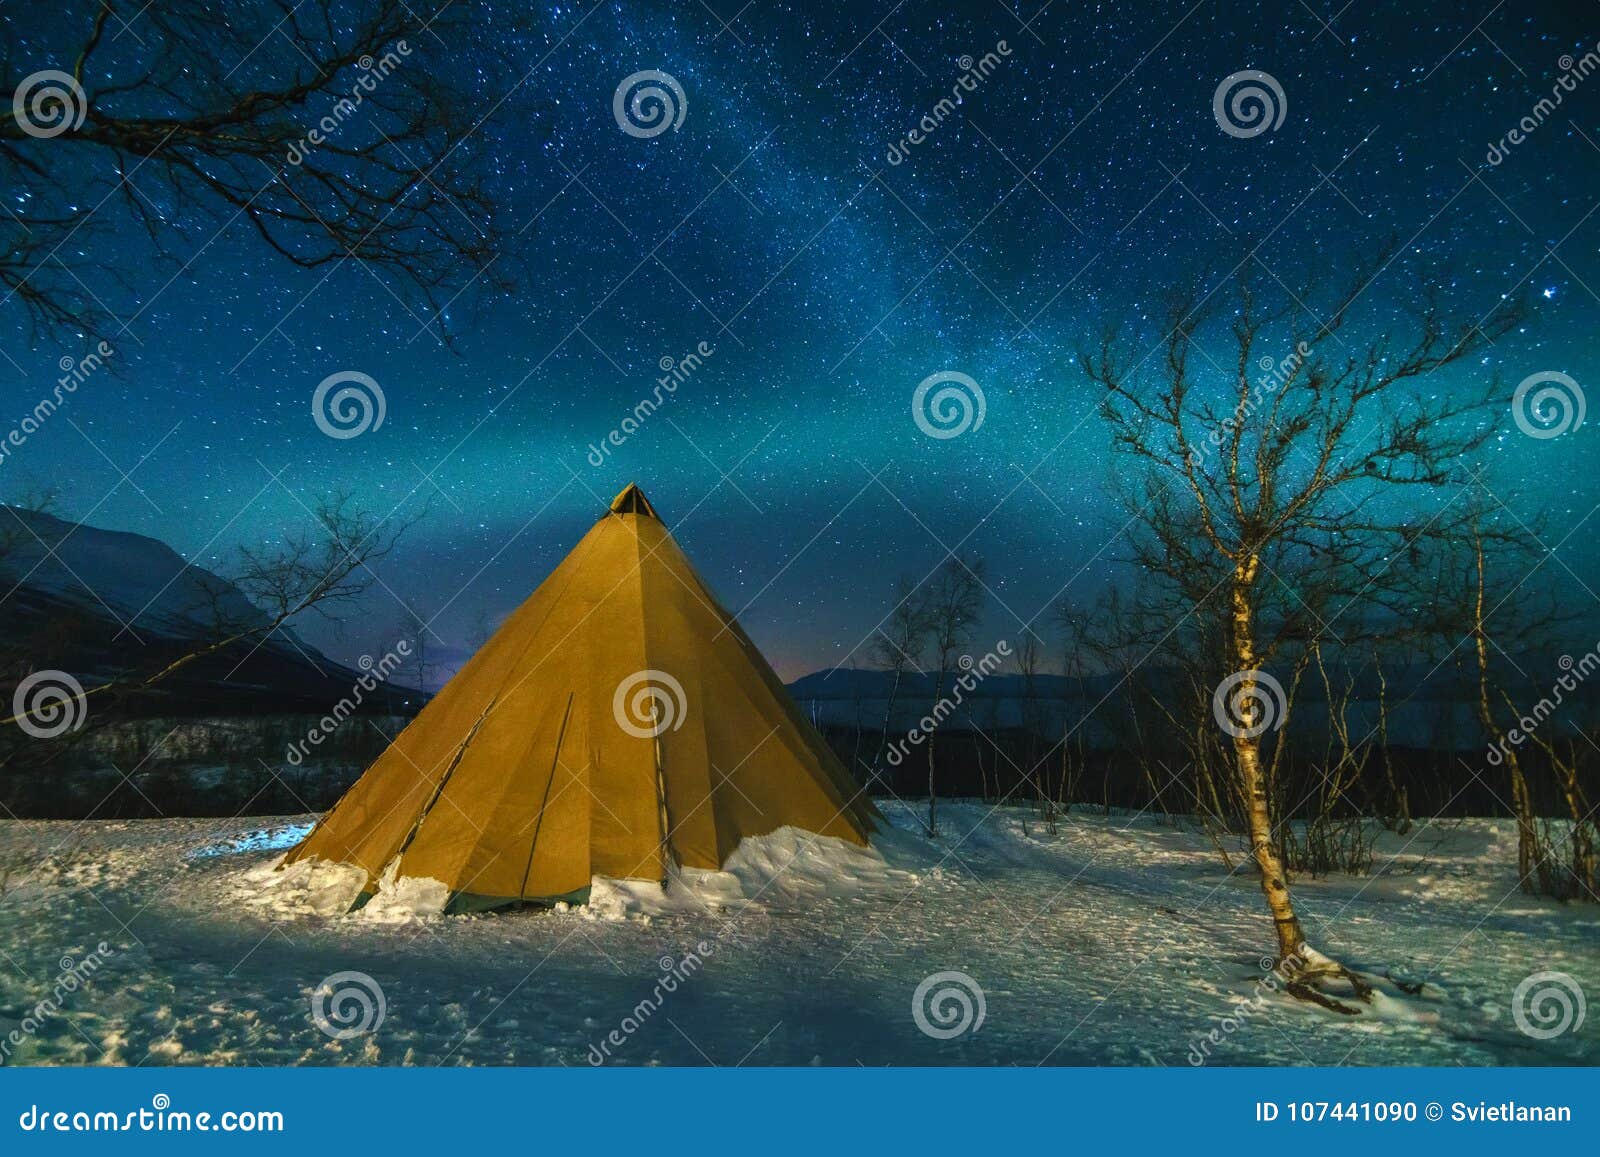 251 Eskimo Tent Stock Photos - Free & Royalty-Free Stock Photos from  Dreamstime